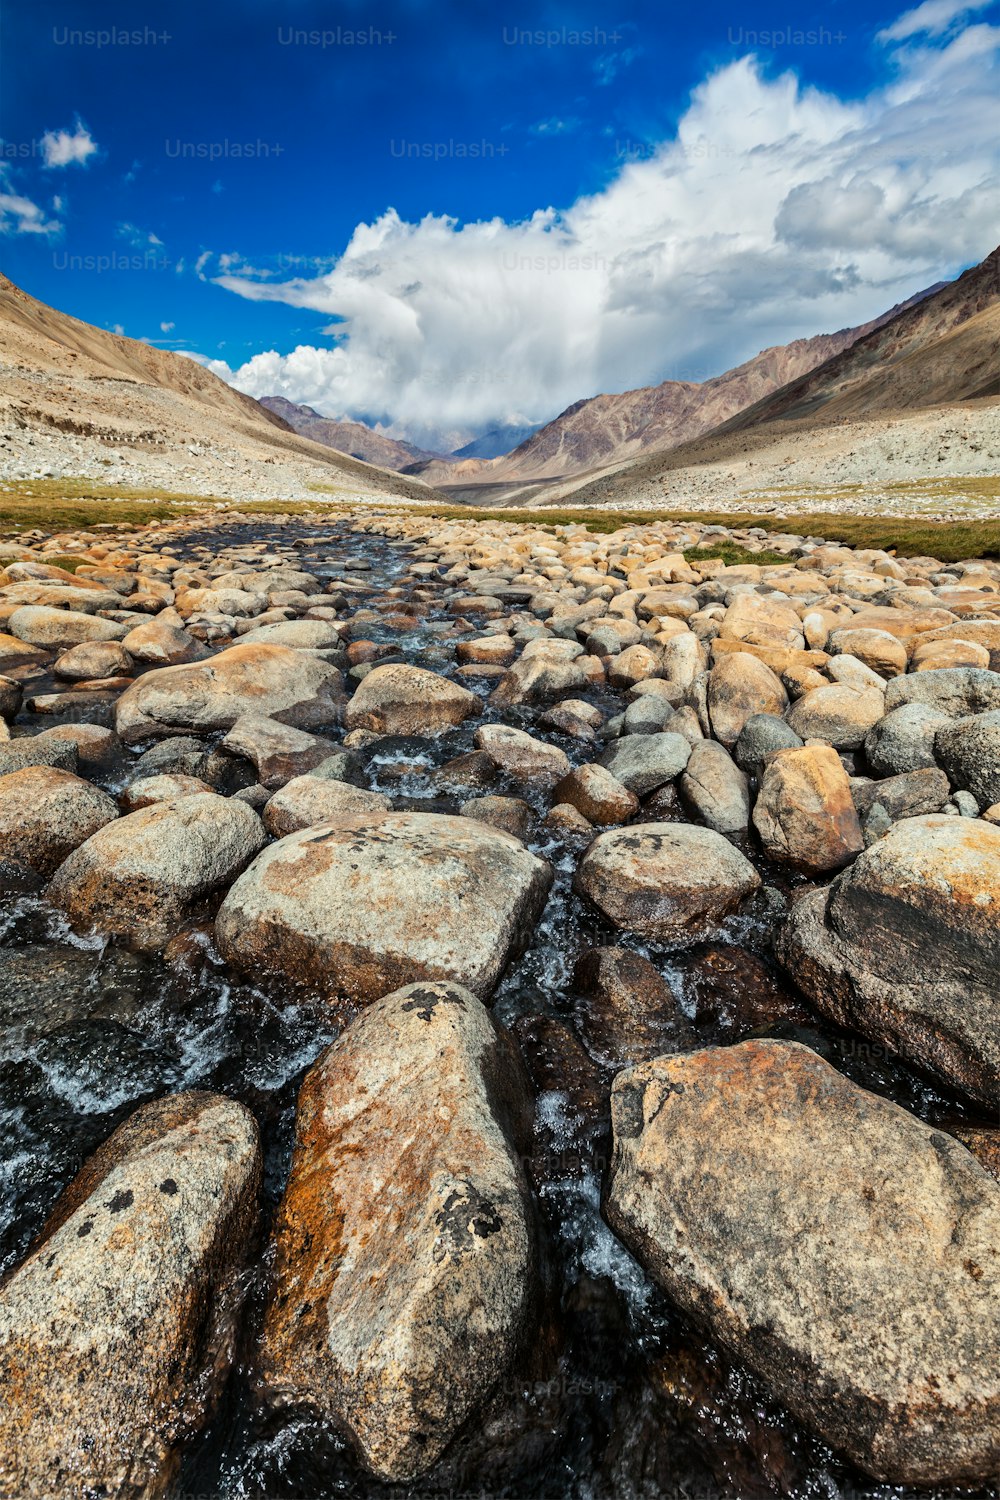 Mountain stream with stones in Himalayas near Khardung La pass. Ladakh, Jammu and Kashmir, India